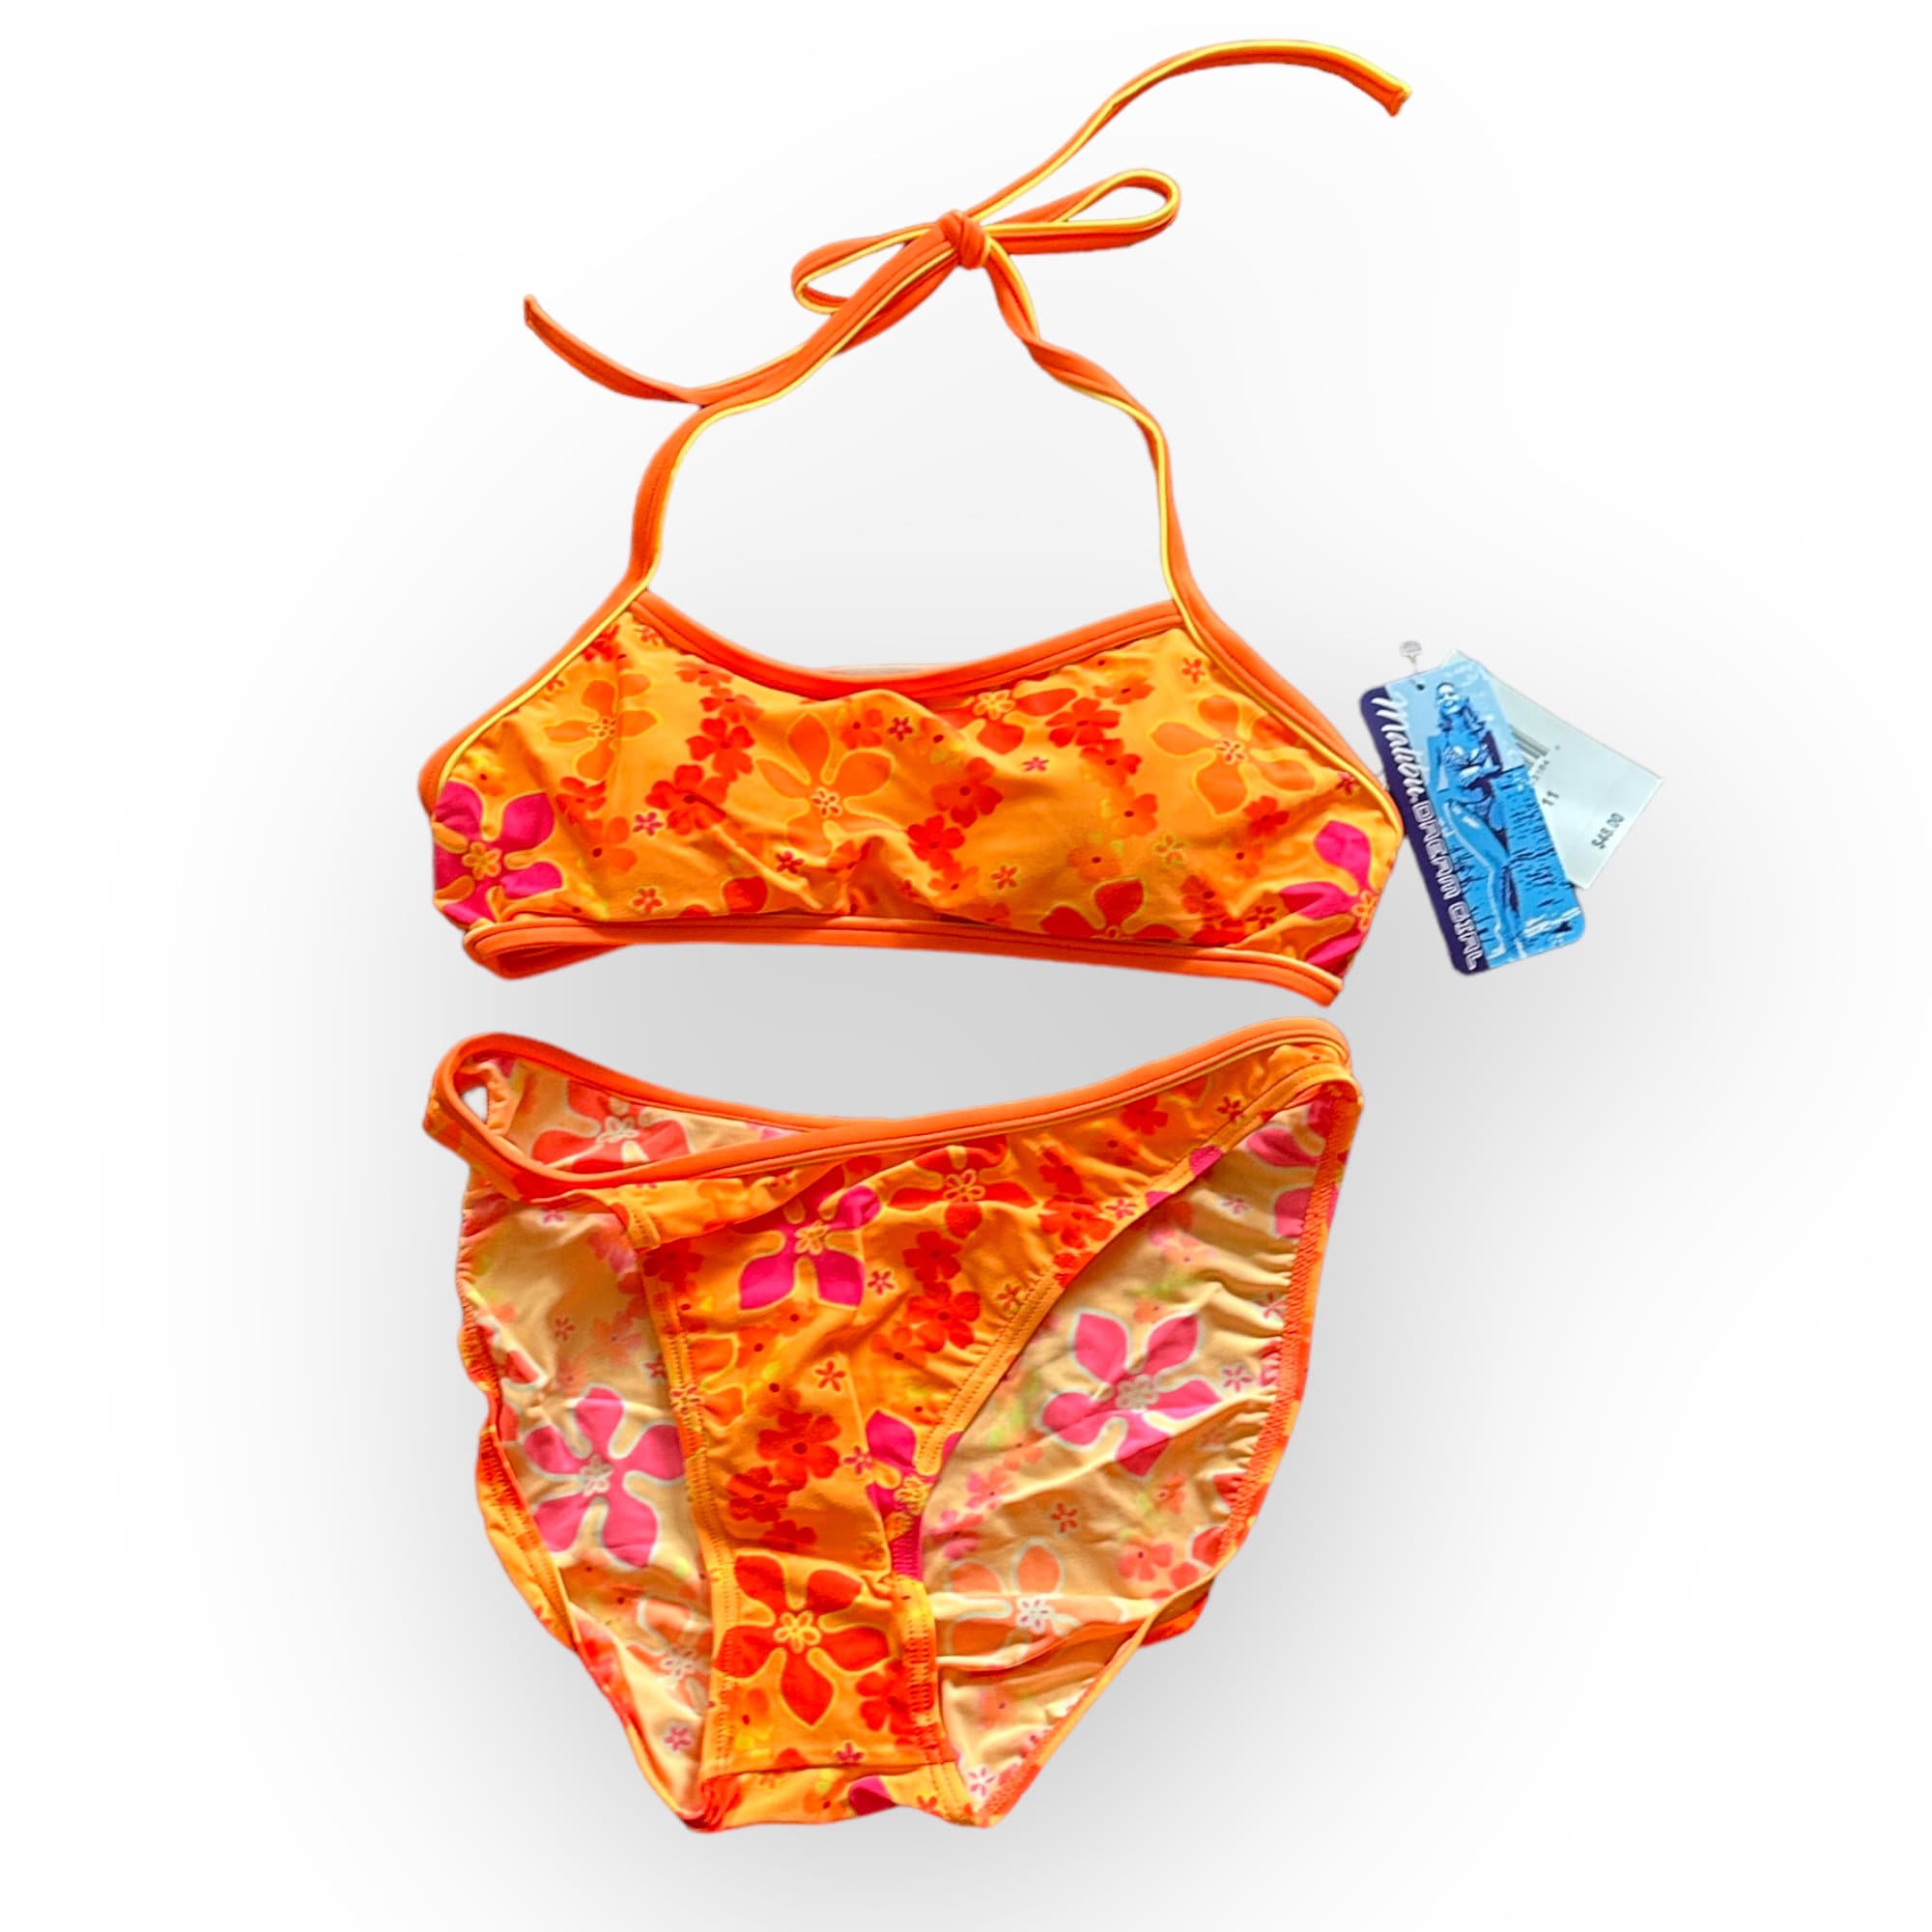  SheIn Women's 2 Piece Colorblock Micro Bikini Set Thong String  Swimsuit Chain Bathing Suit Pink Medium : Clothing, Shoes & Jewelry